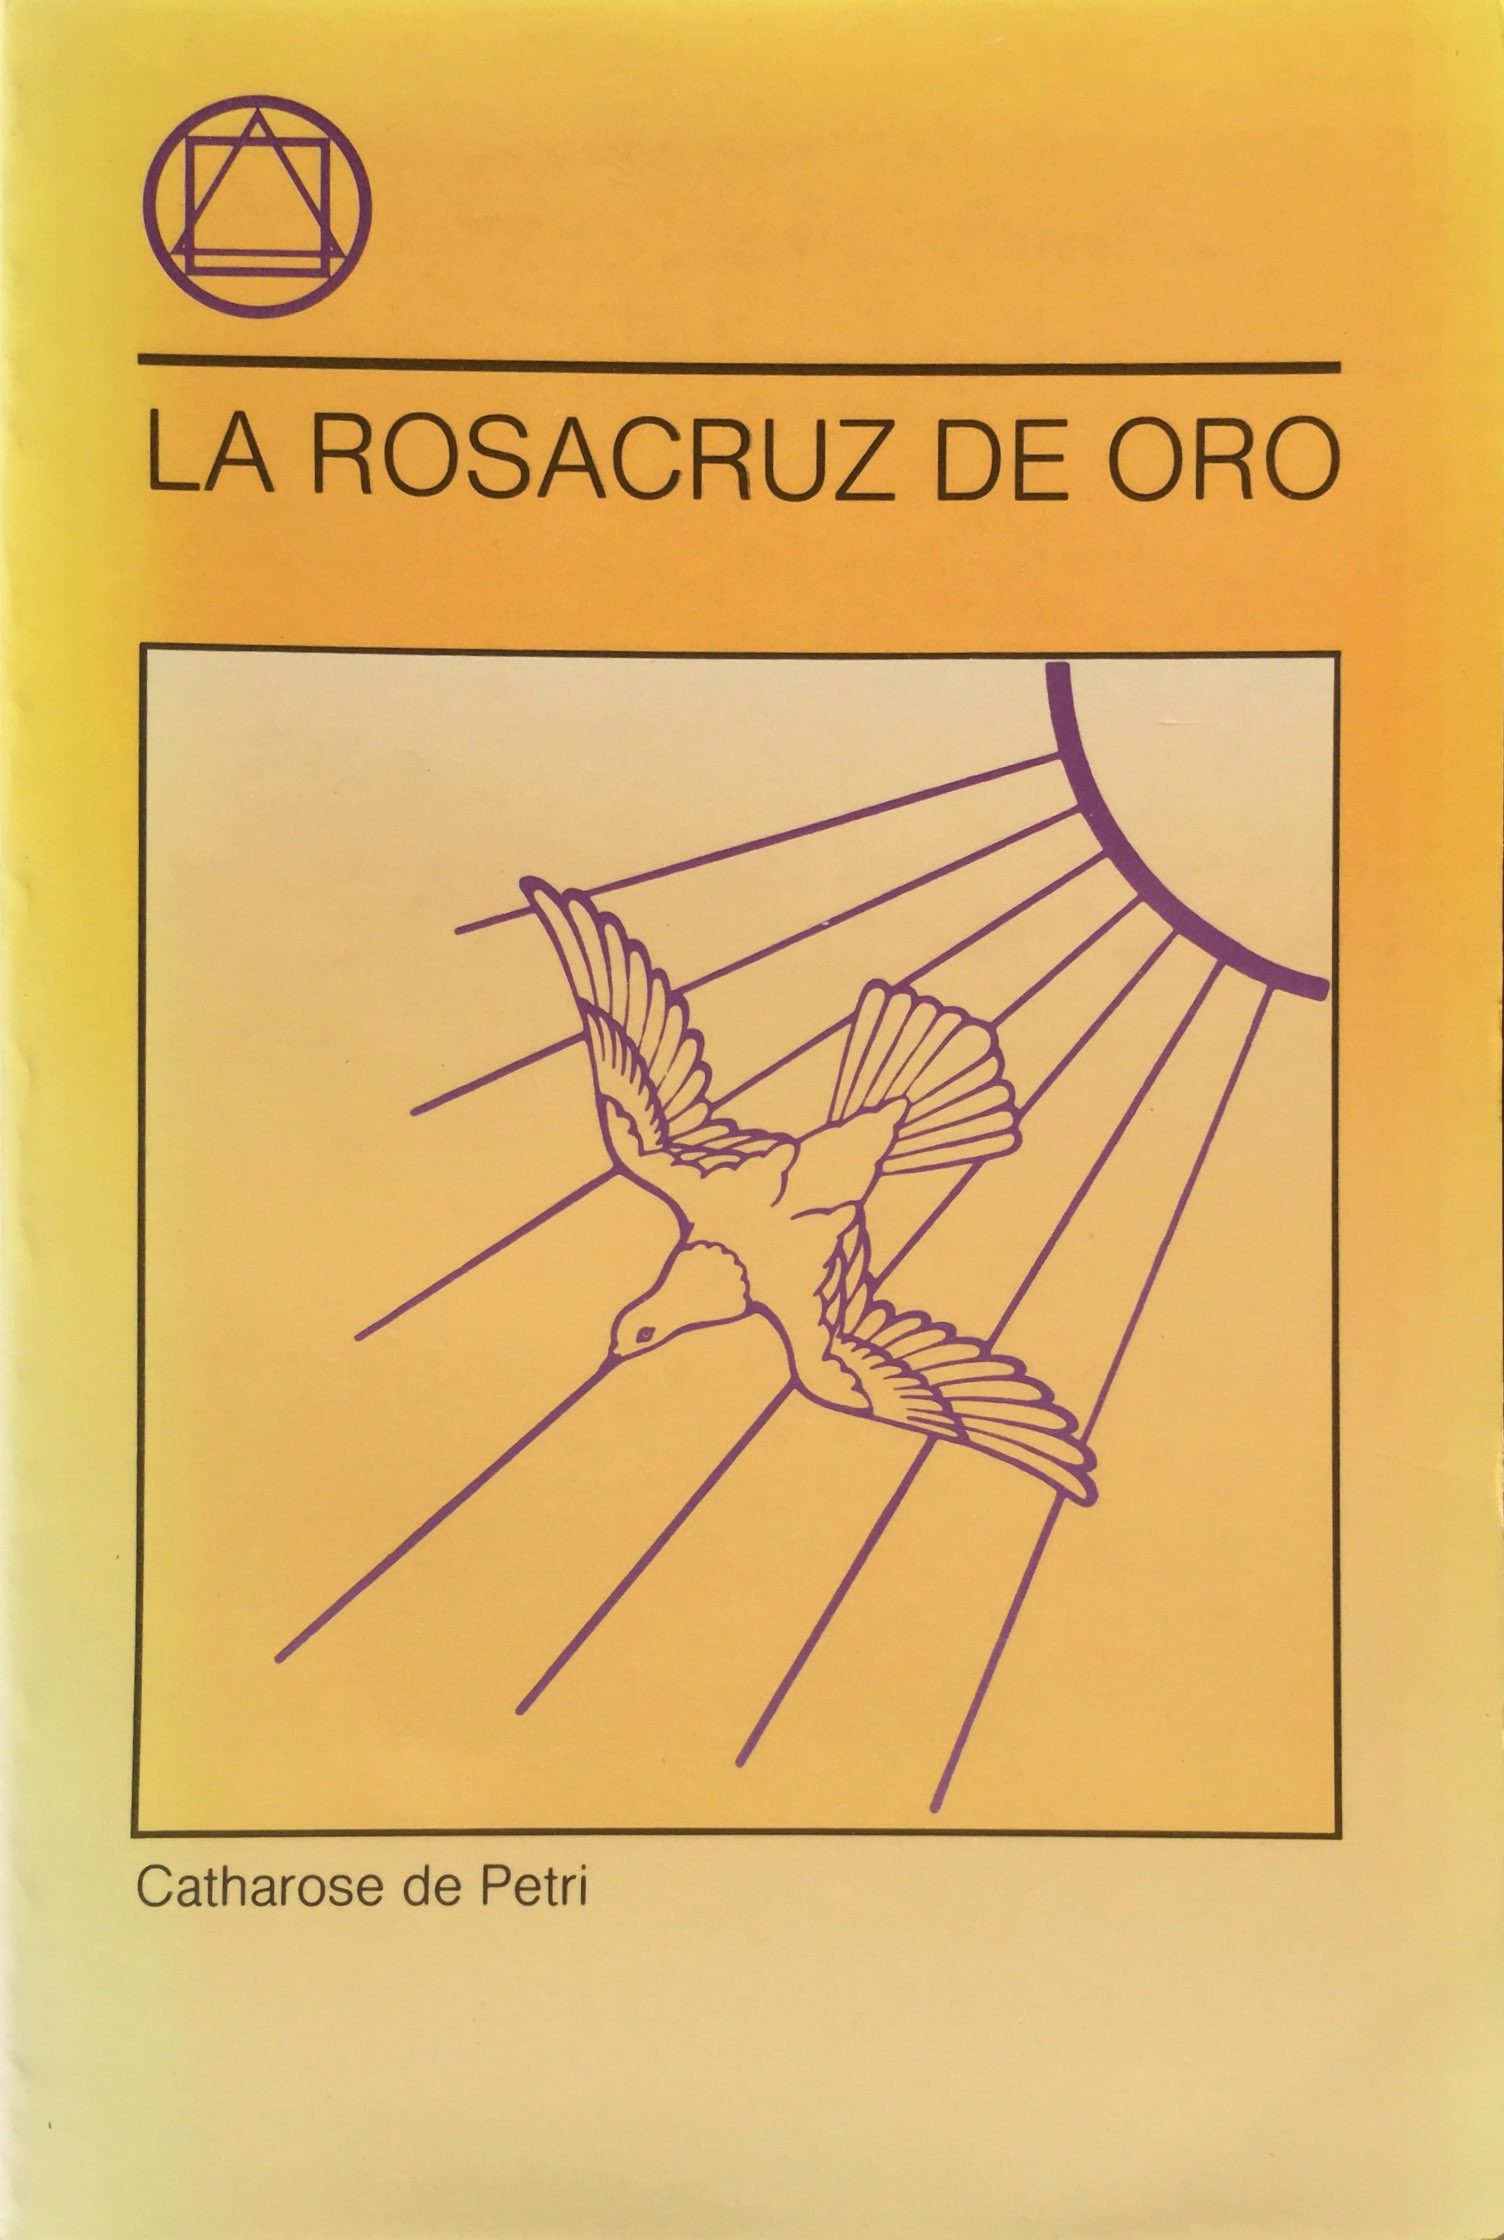 Portada Libro - La Rosacruz de Oro